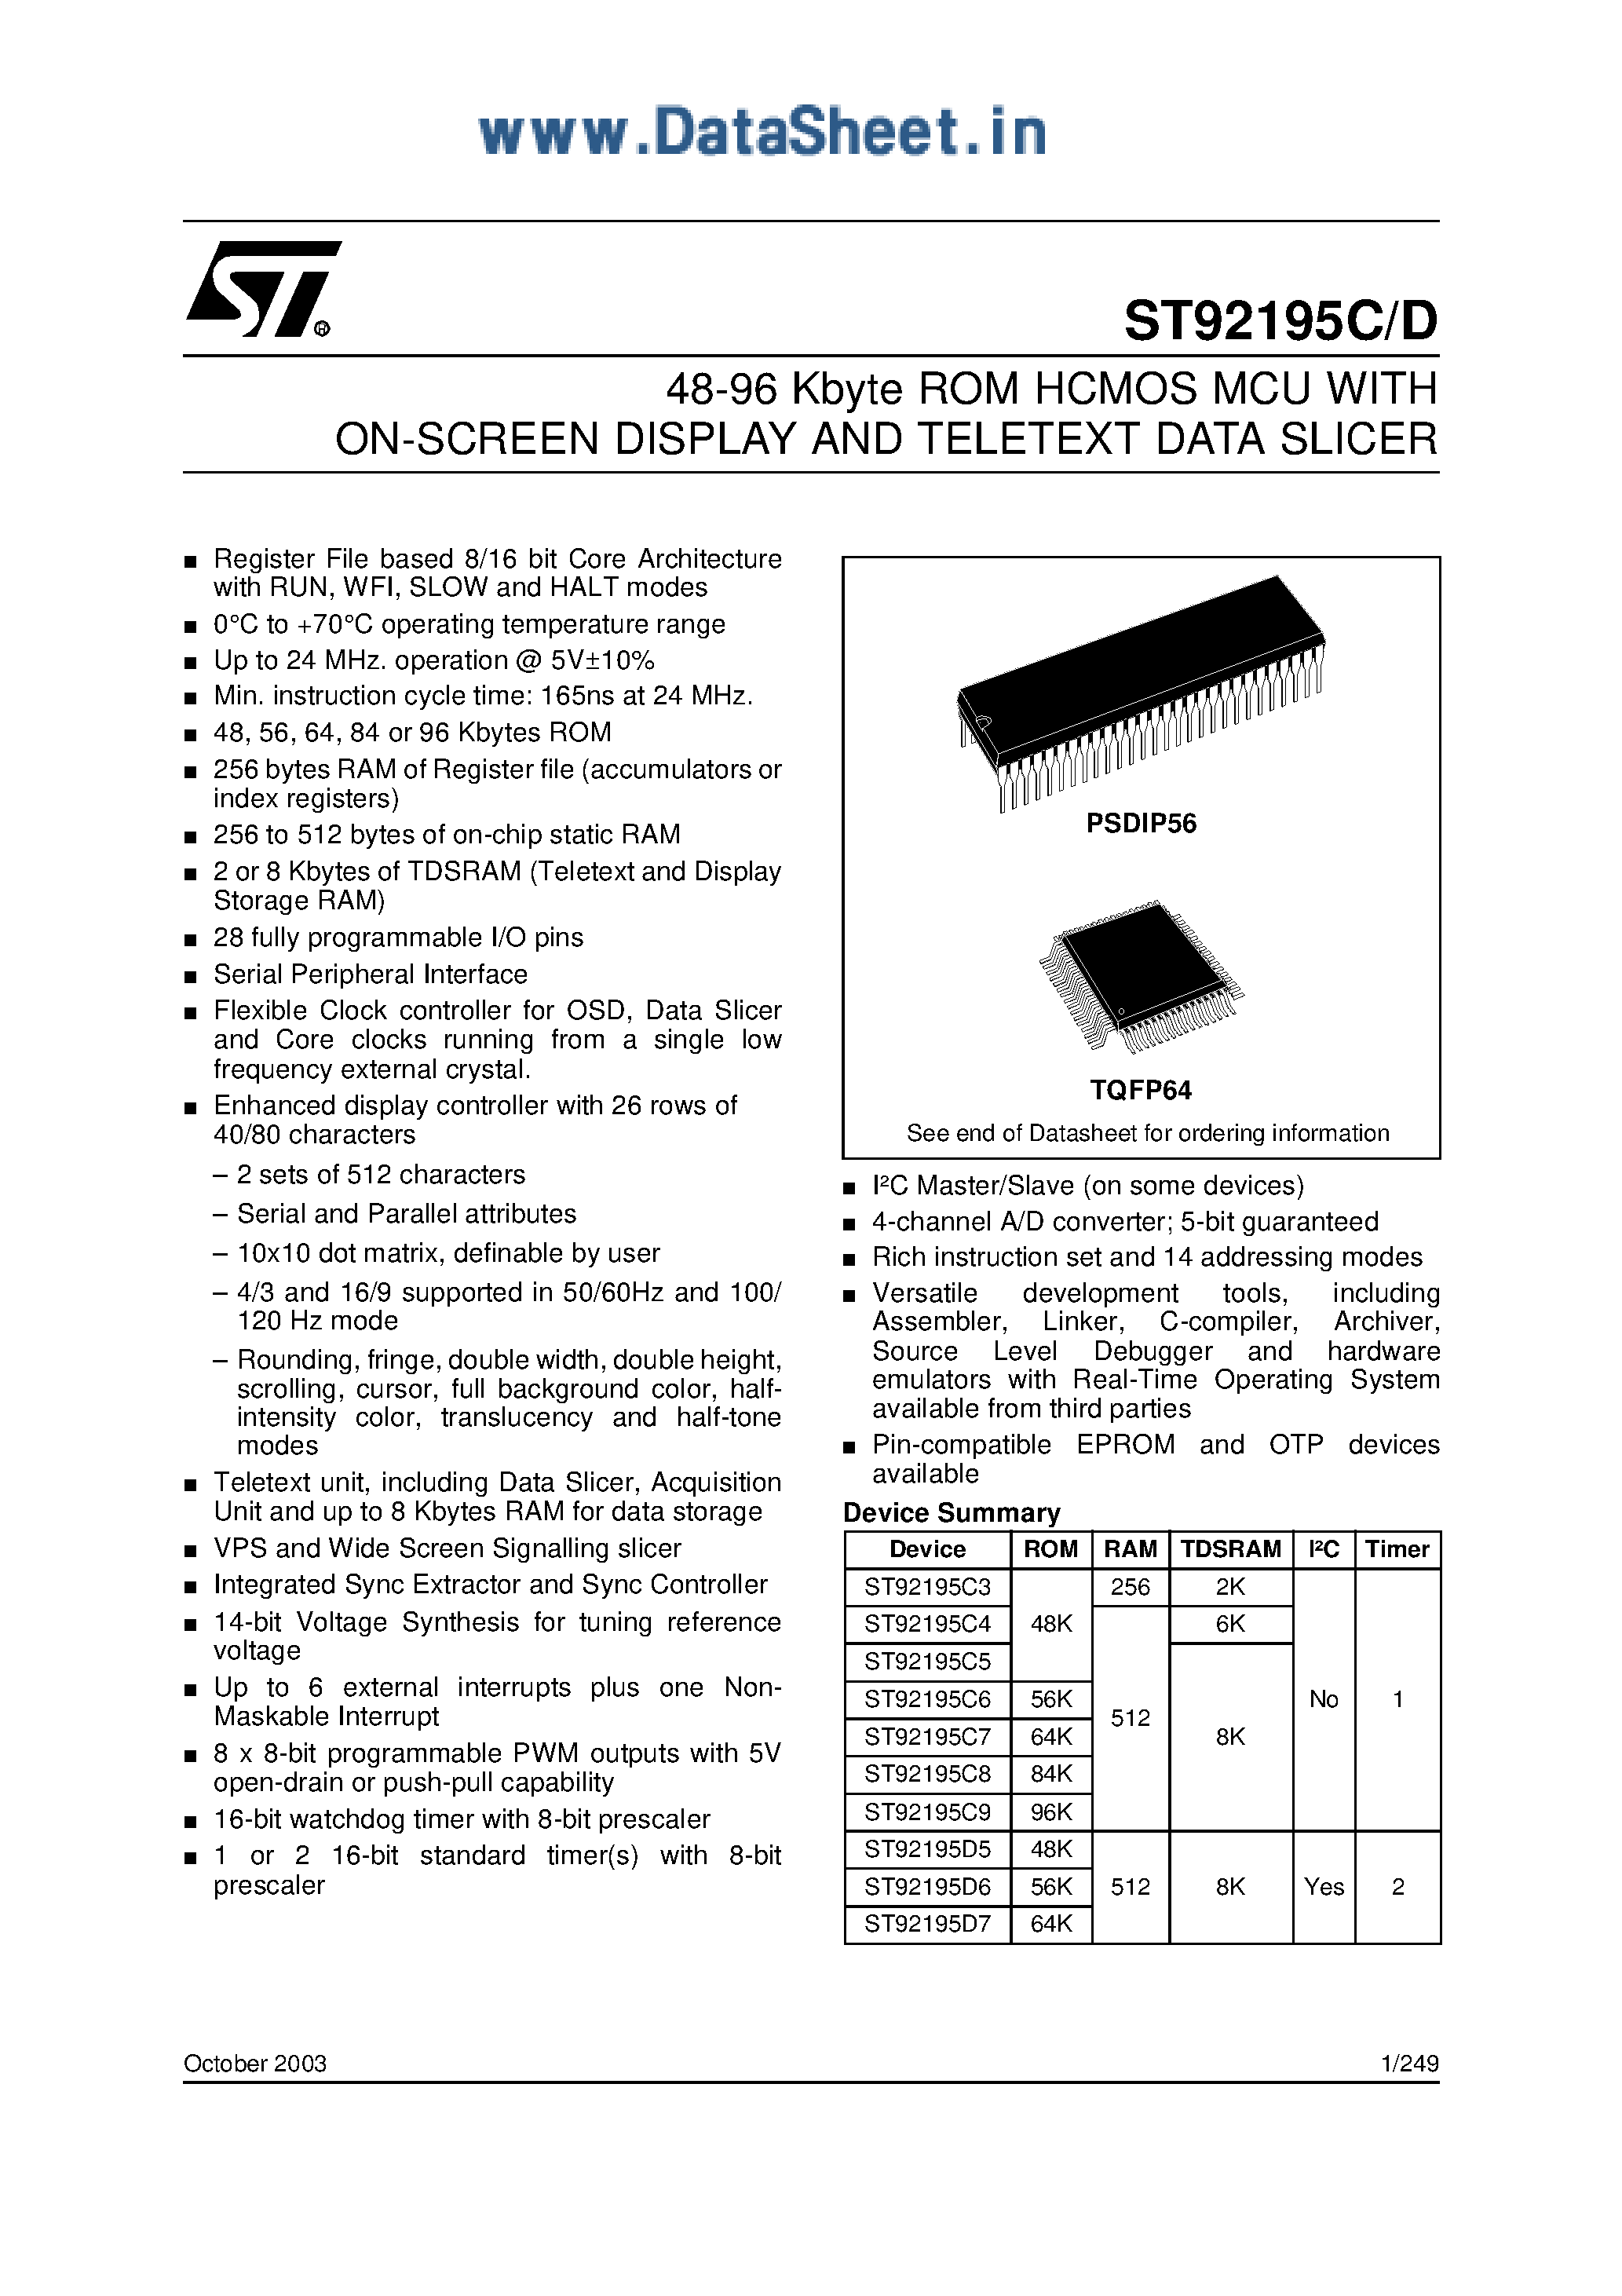 Даташит ST92195C - (ST92195C/D) 48-96 Kbyte ROM HCMOS MCU страница 1